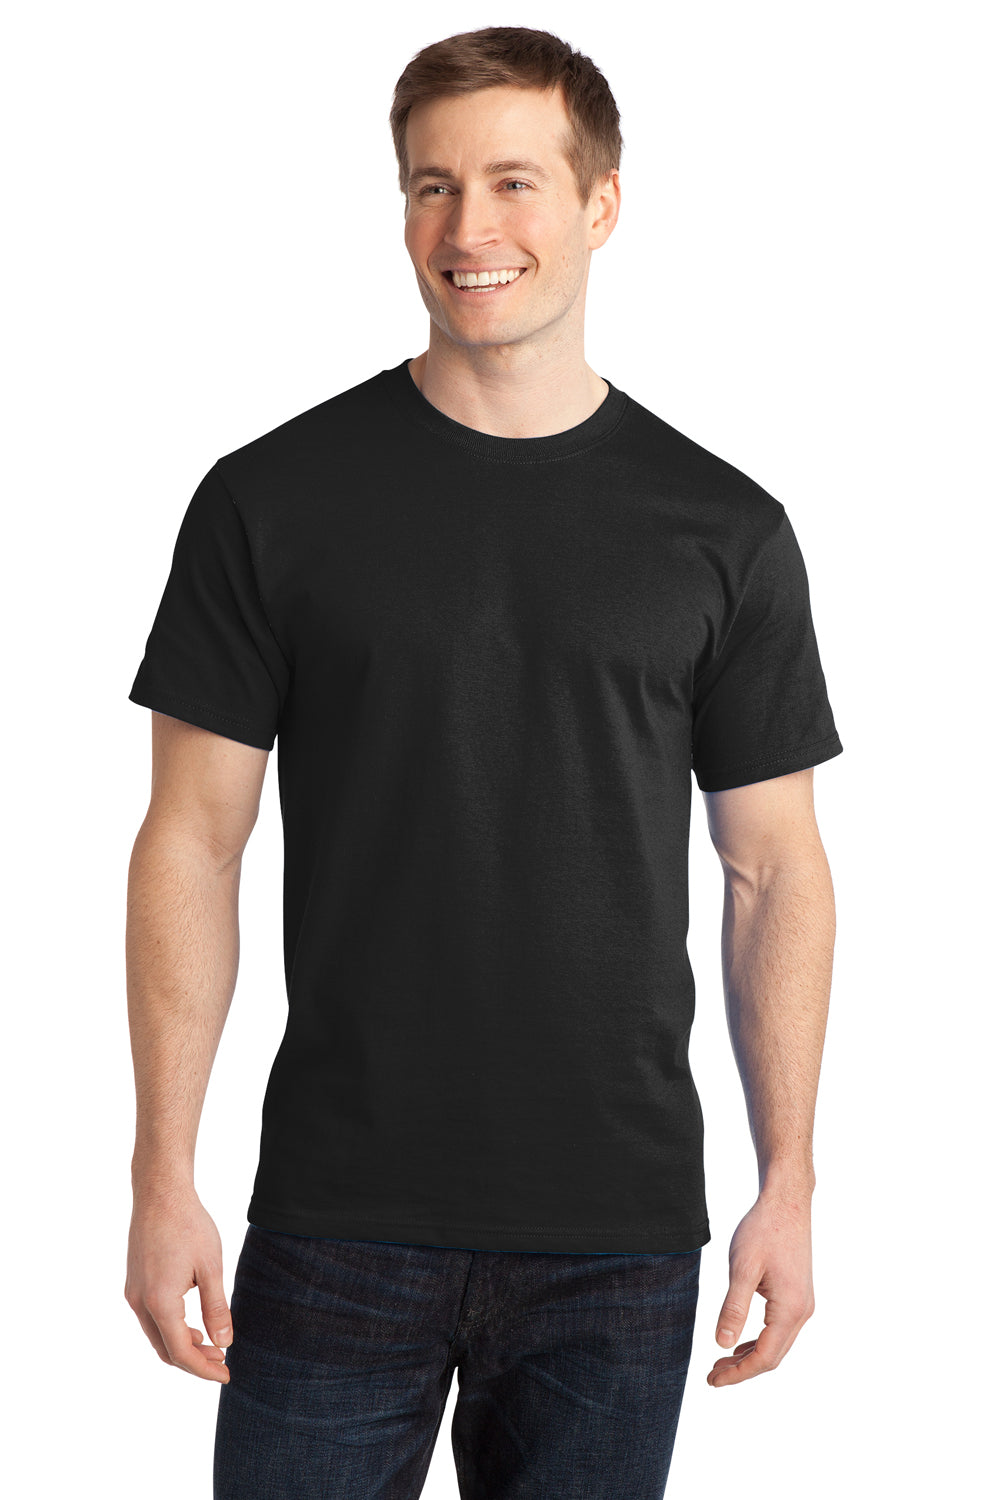 Port & Company PC150 Mens Short Sleeve Crewneck T-Shirt Black Front